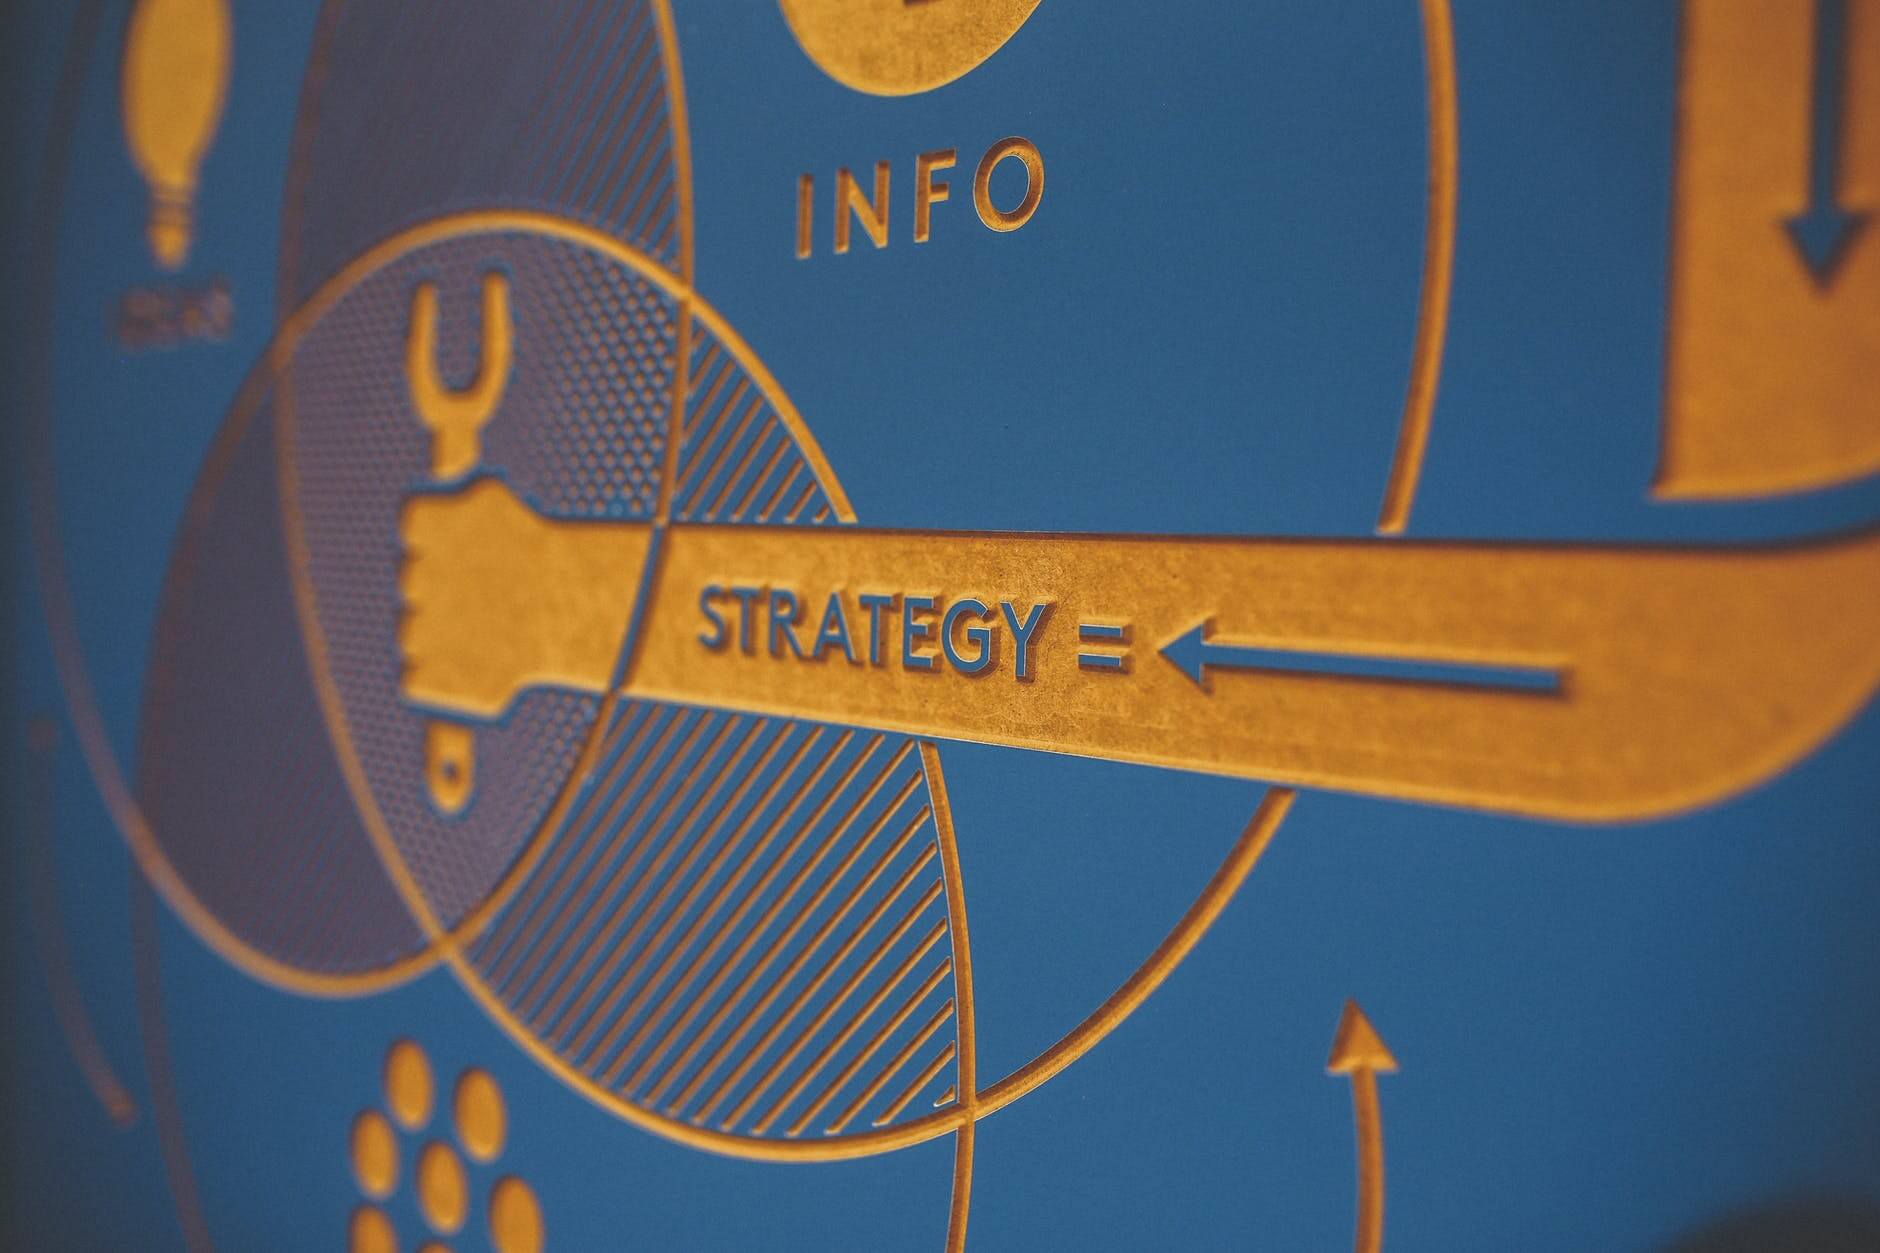 Digital-Marketing-Strategy-Steps